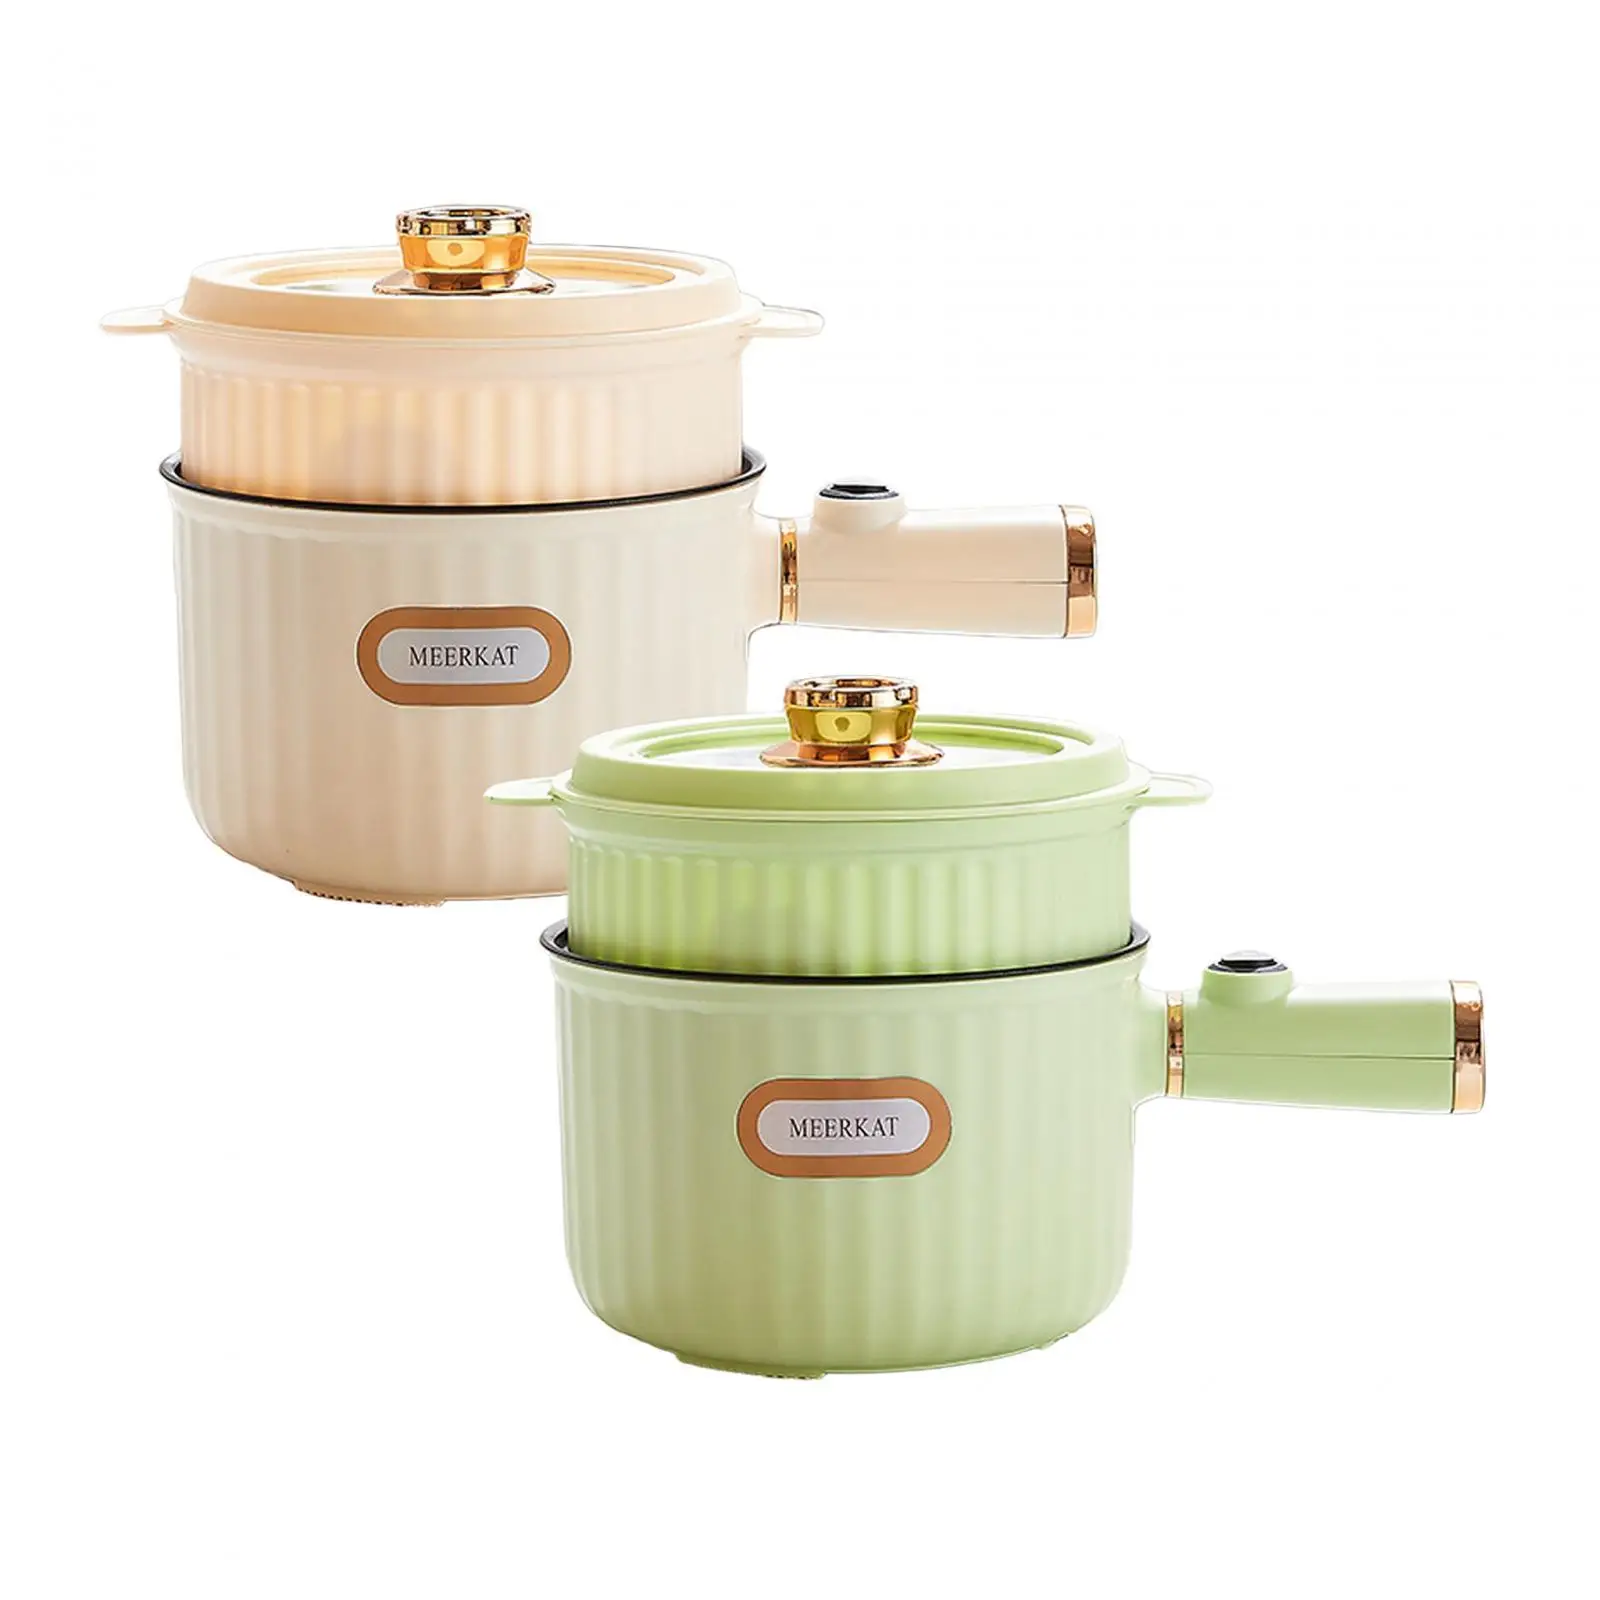 https://ae01.alicdn.com/kf/Sa242b037a1854bd7bf0884d879d17cb8B/Hot-Pot-Electricr-Multifunctional-Portable-Mini-Pot-Nonstick-Frying-Pan-Noodles-Cooker-for-Soup-Oatmeal-Porridge.jpg